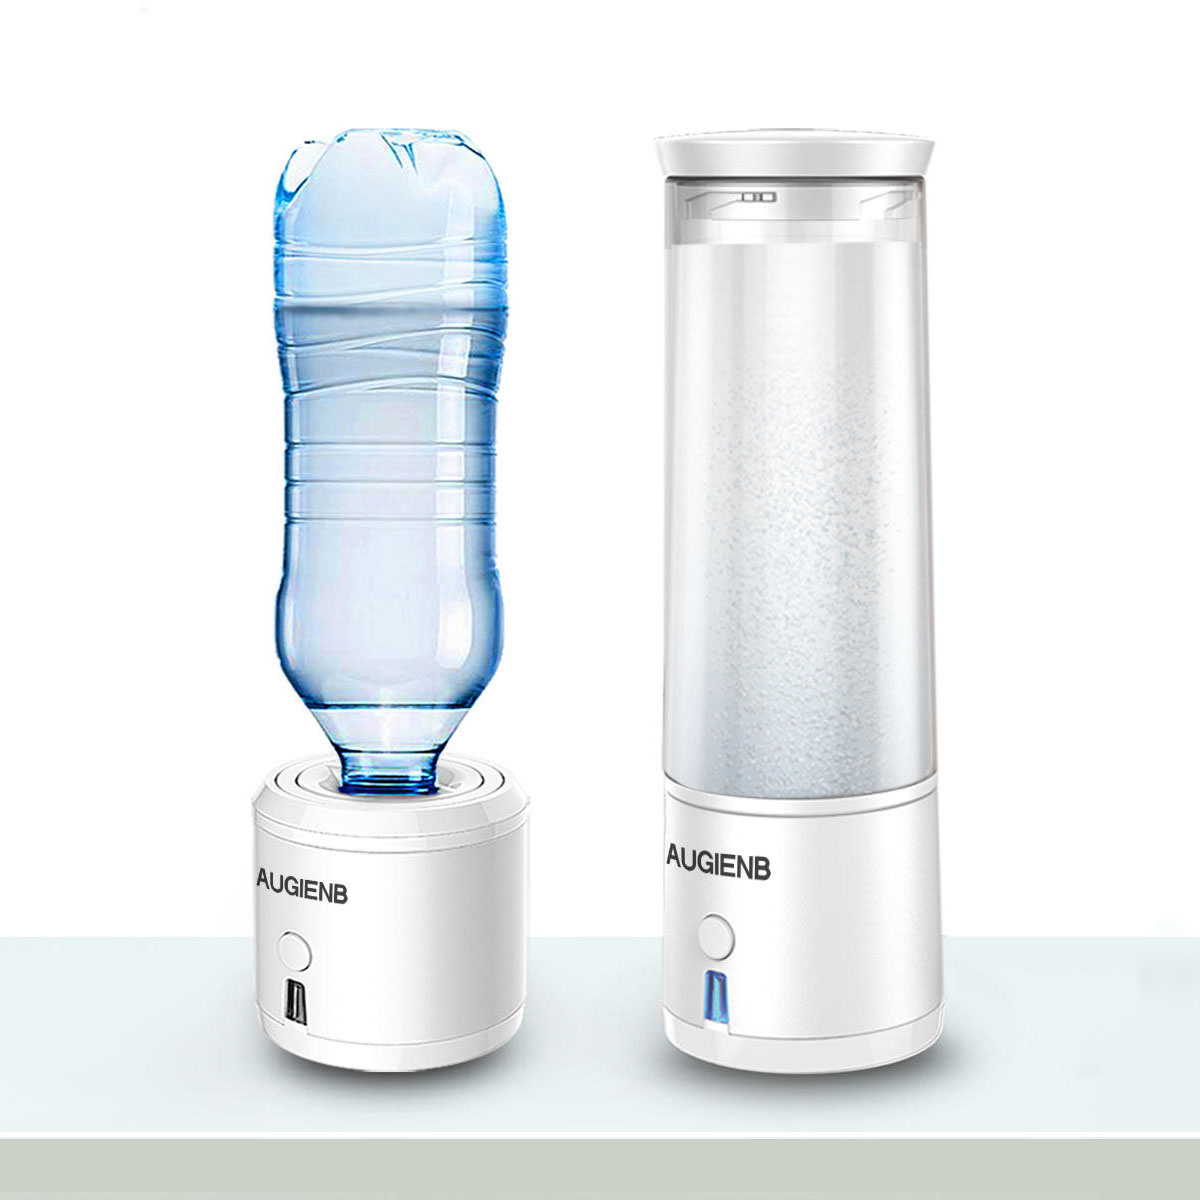 

AUGIENB WH02 Portable Smart Hydrogen-Rich Cup Water Generator Ionizer Maker Healthy Alkaline Energy Cup Water Bottle